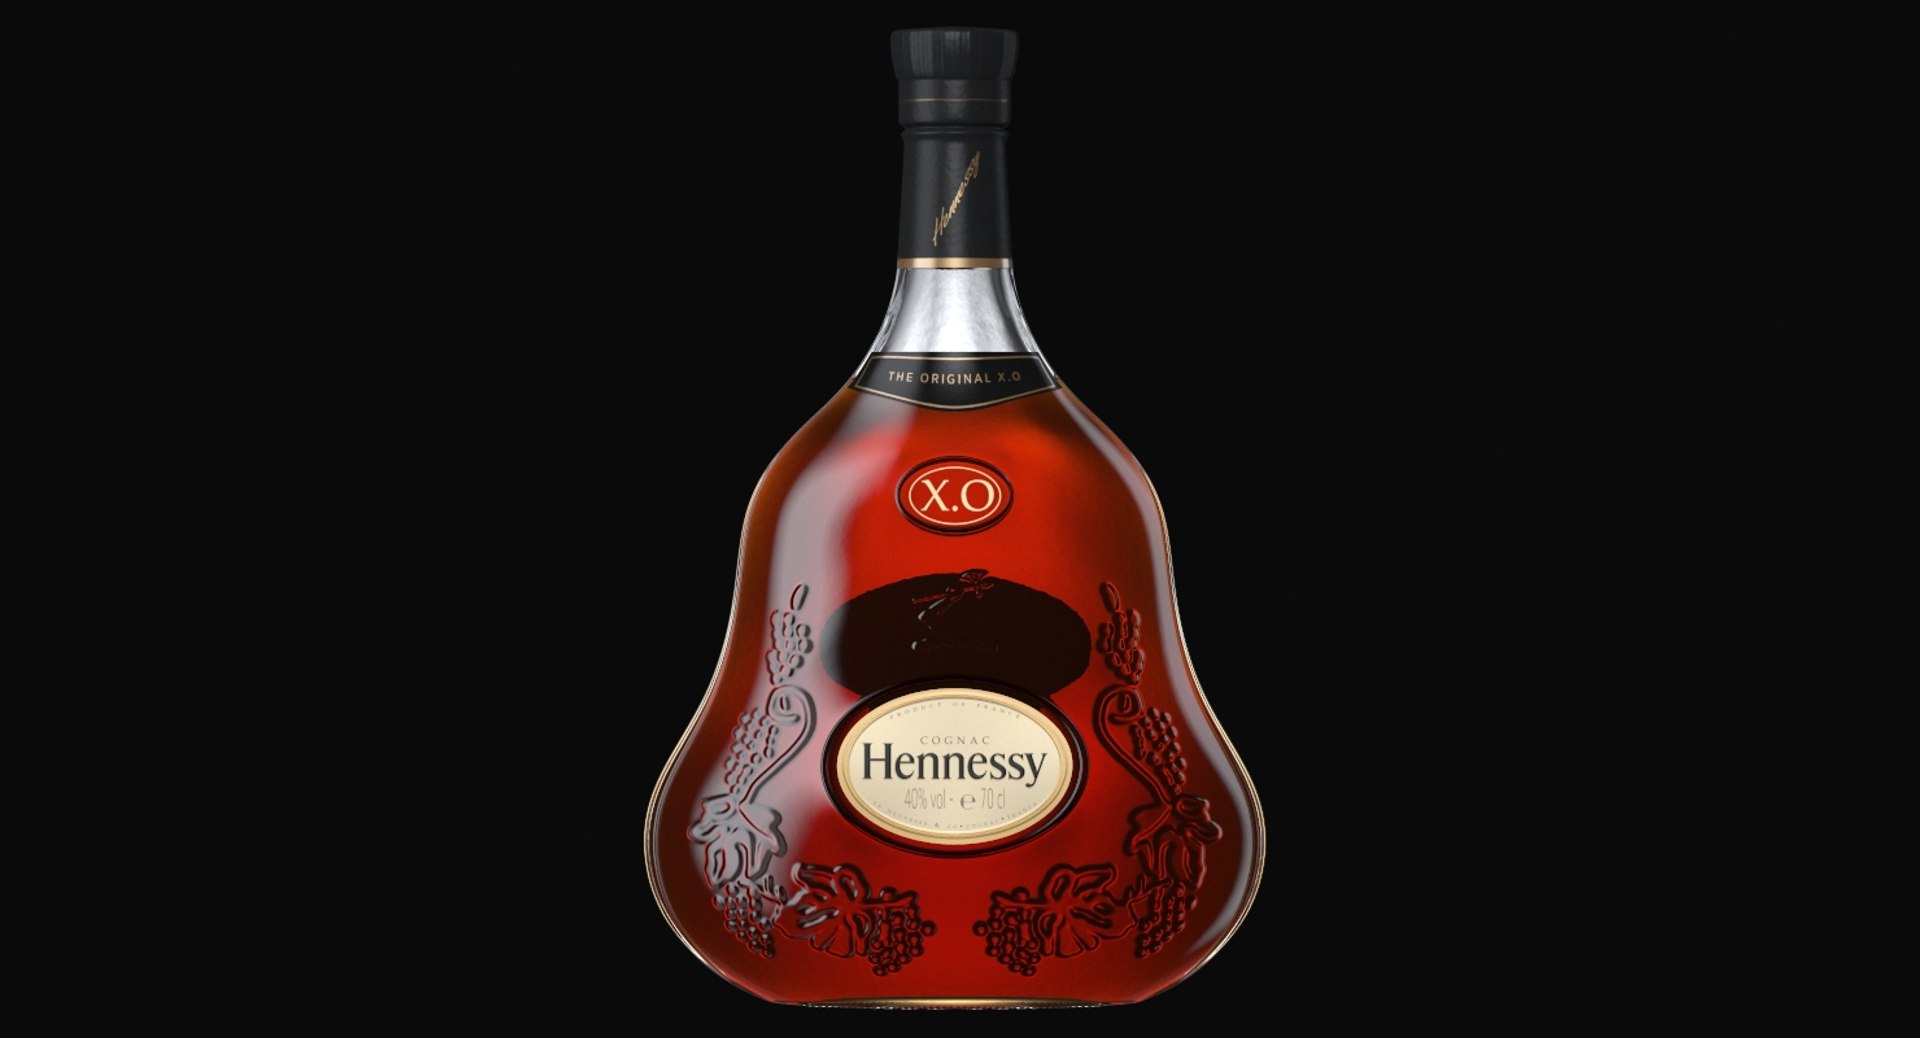 Hennessy xo cognac bottle 3D model - TurboSquid 1428660